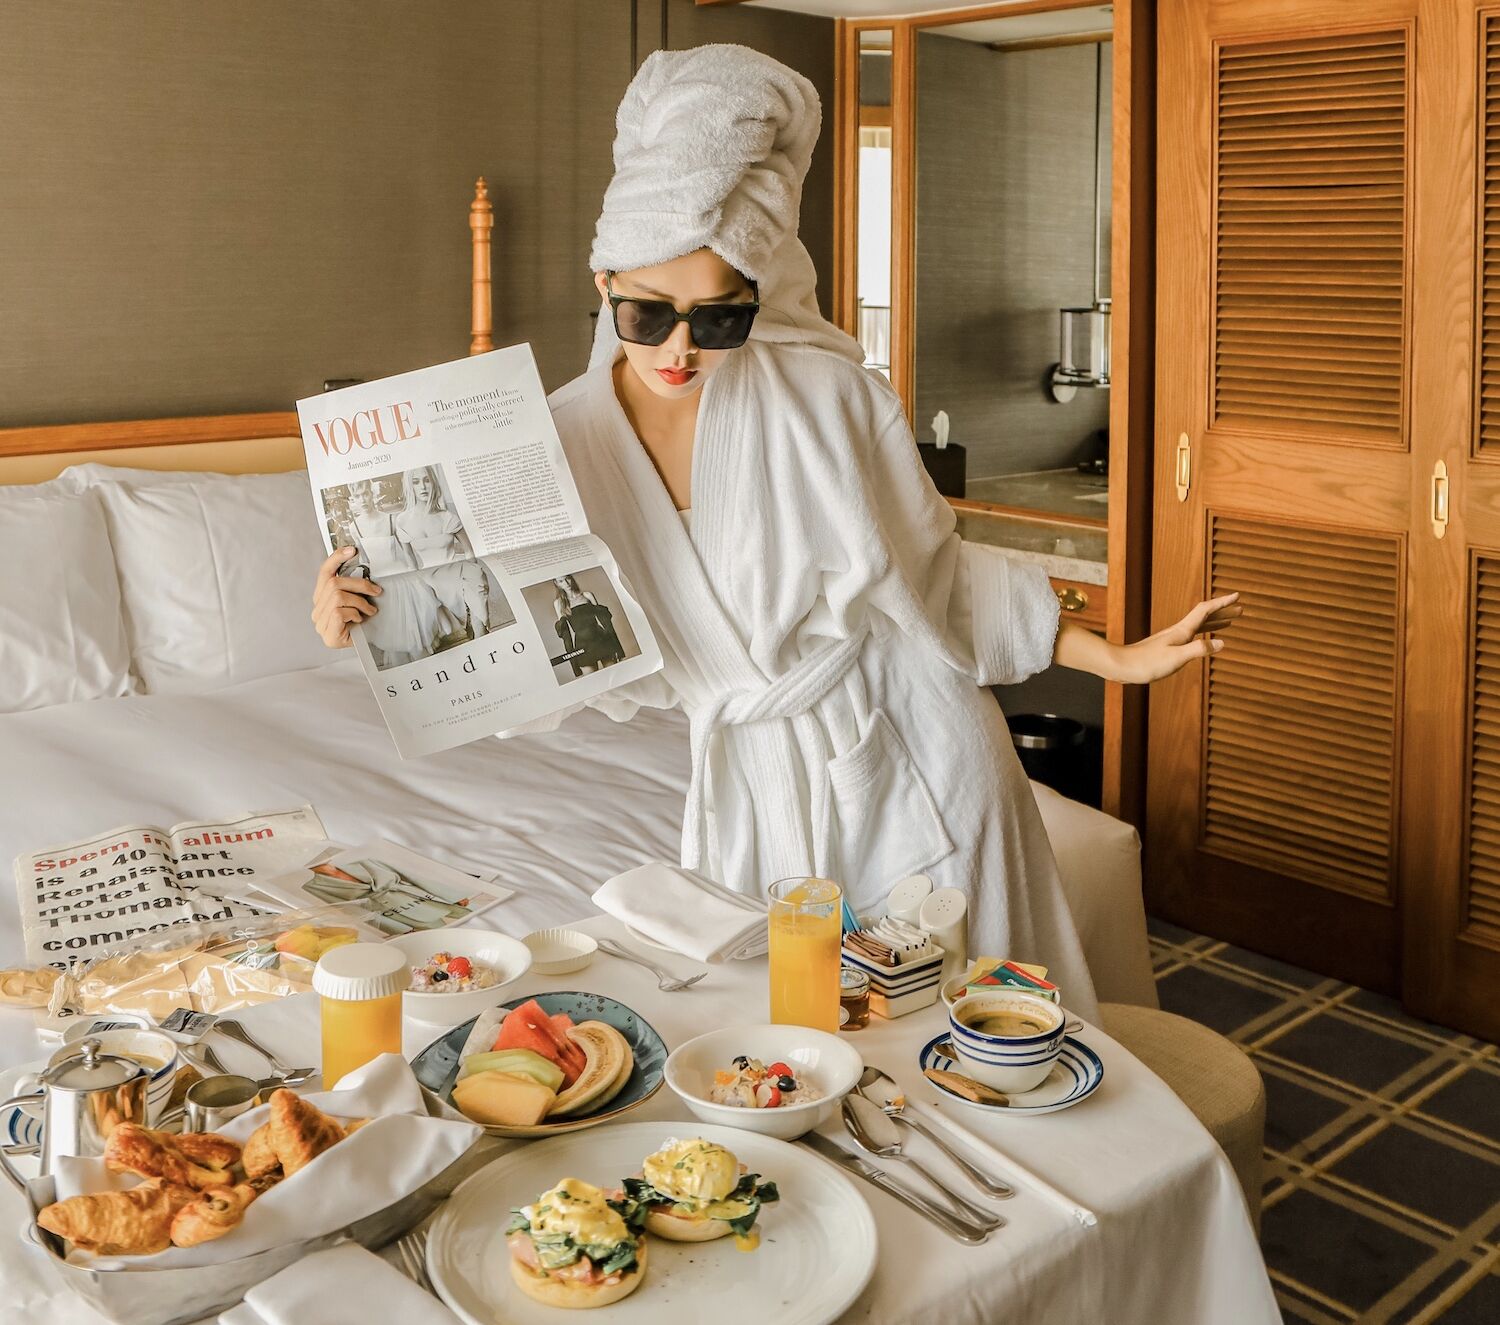 Artyzen Grand Lapa Macau 2021 Deluxe room with breakfast for two